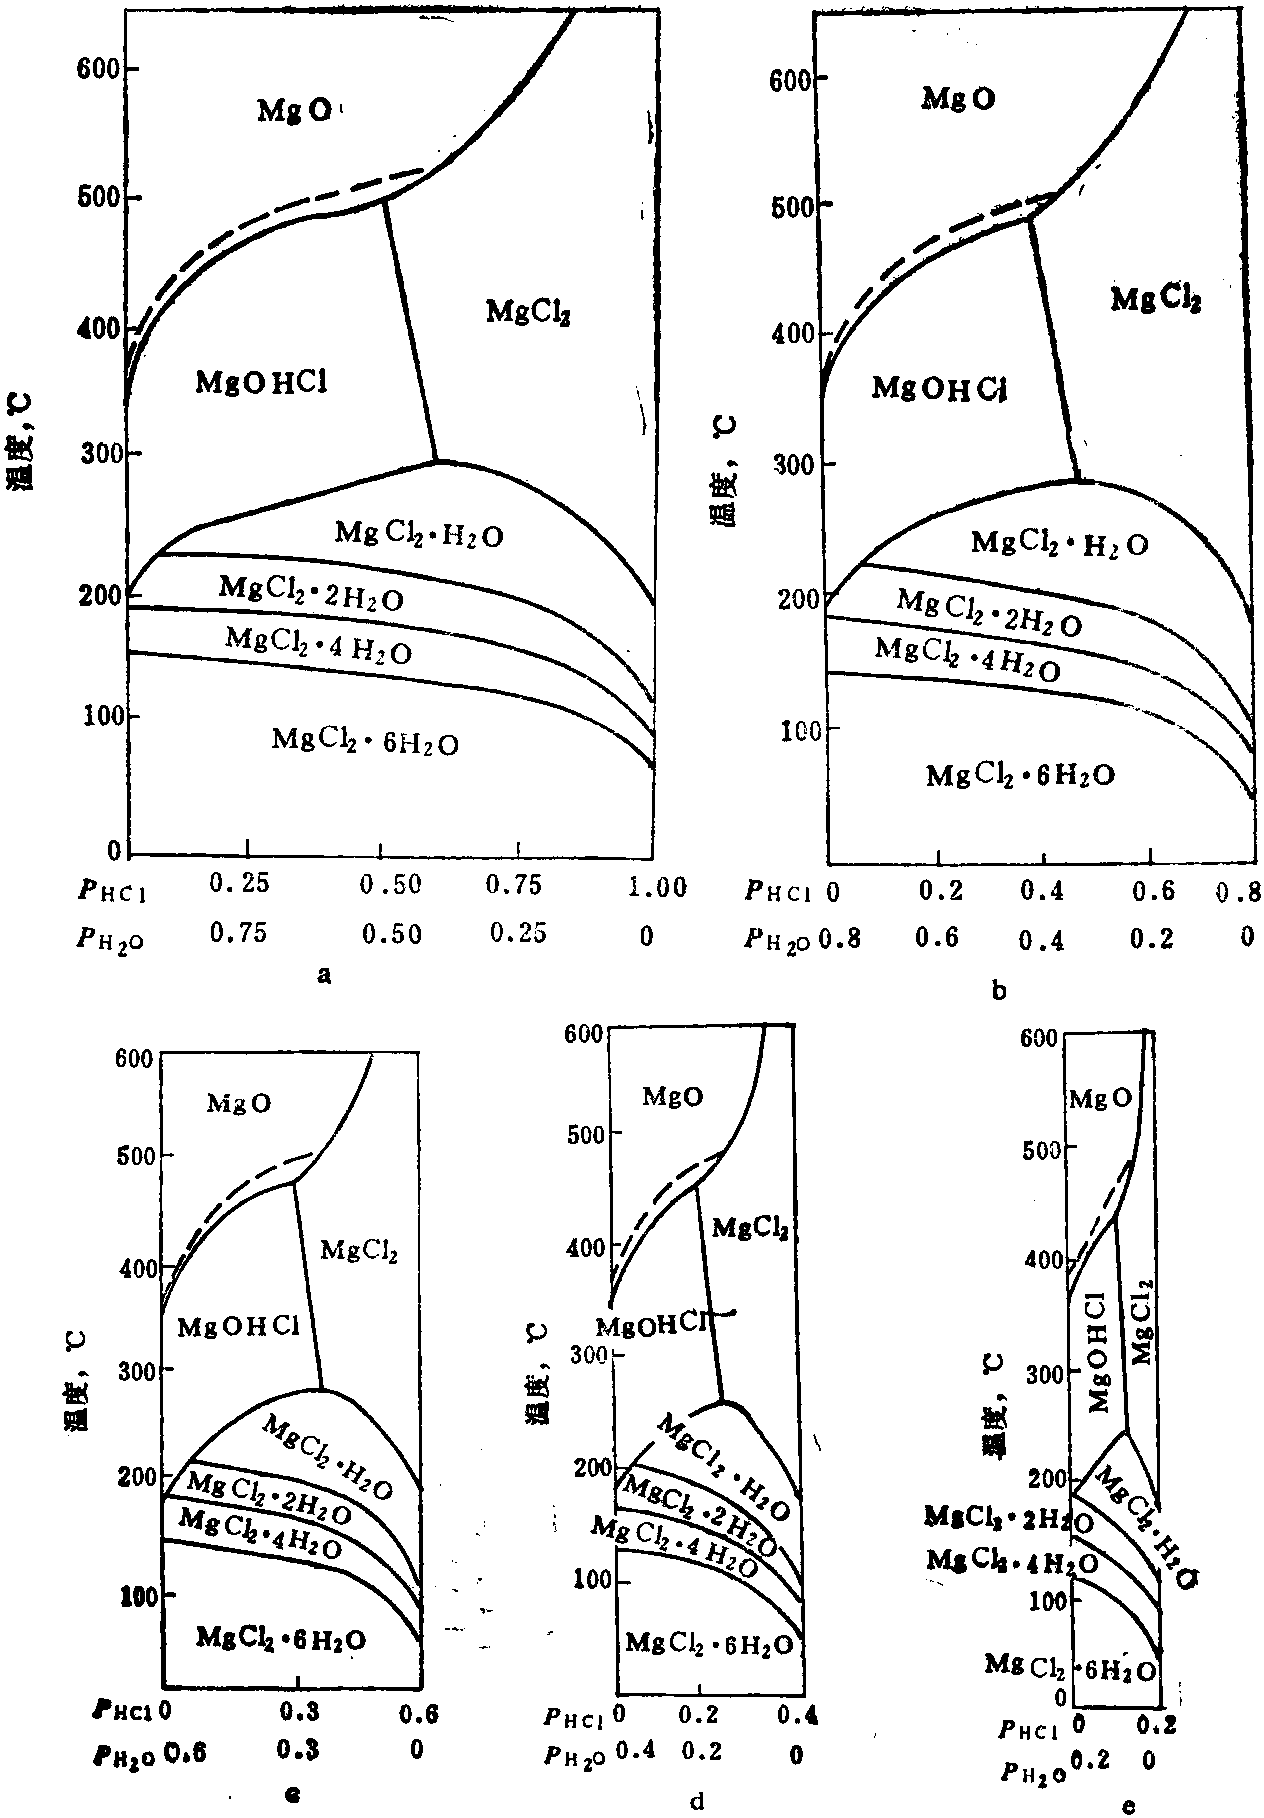 第四节 在HCl-H<sub>2</sub>O气氛下MgCl<sub>2</sub>-MgO的相图